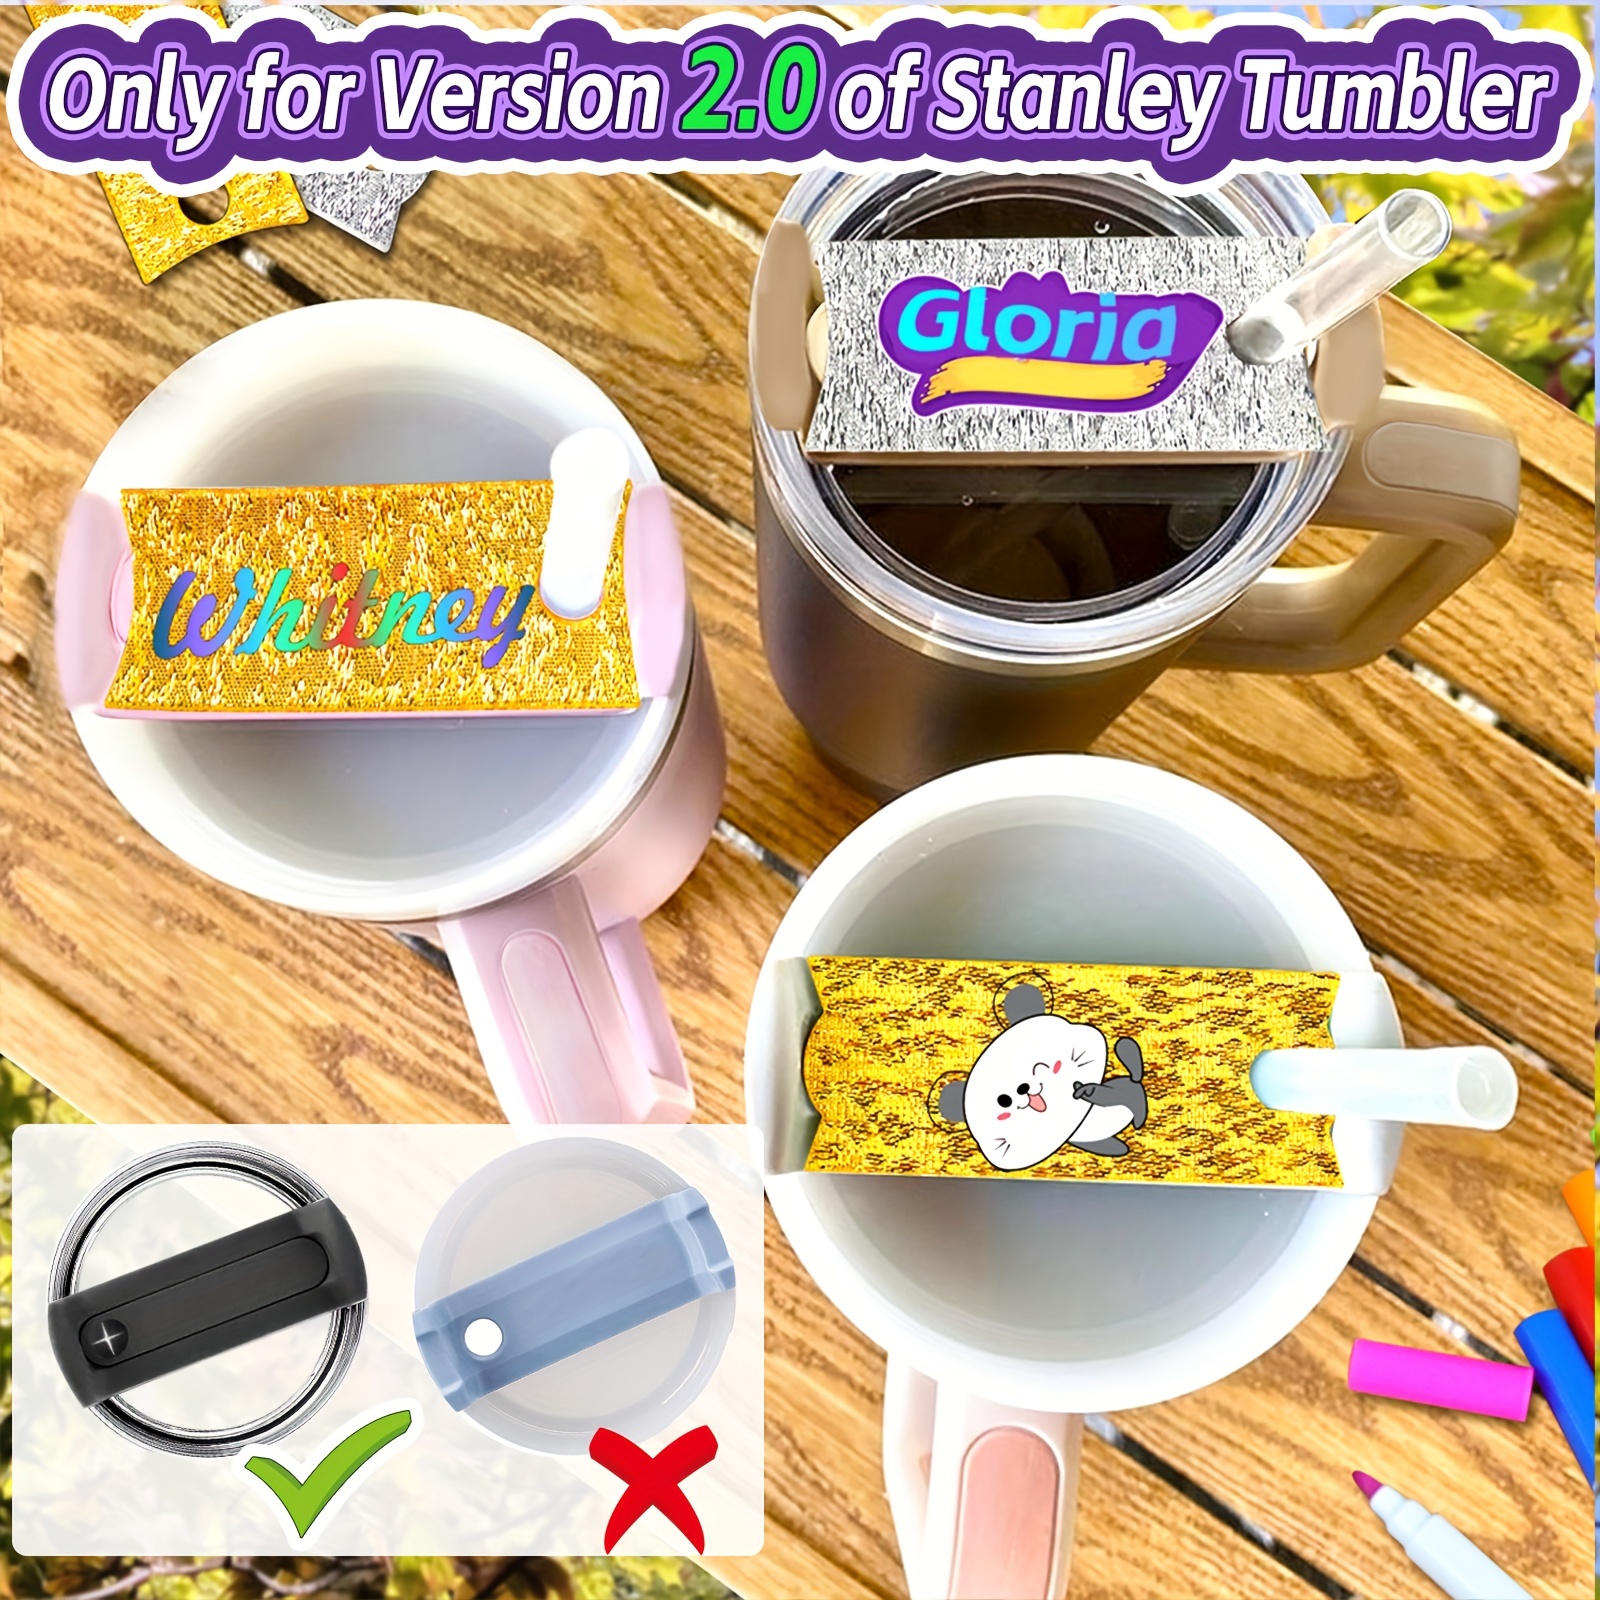 Stanley cup name tag tutorial using UV resin! #kpcreates